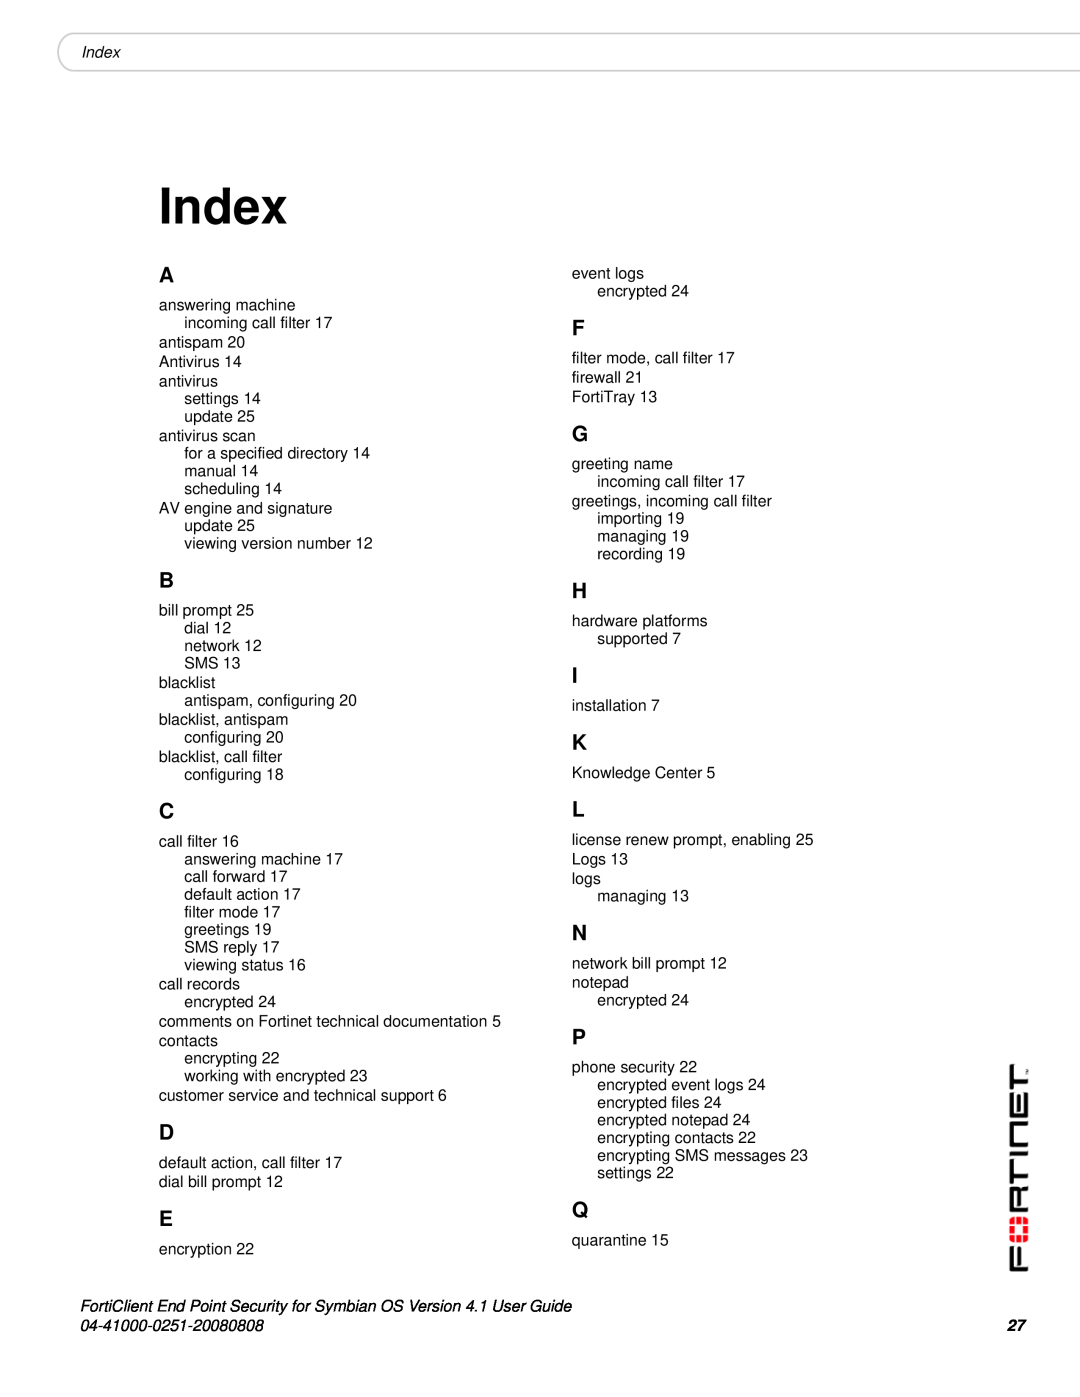 Fortinet Version 4.1 manual Index 